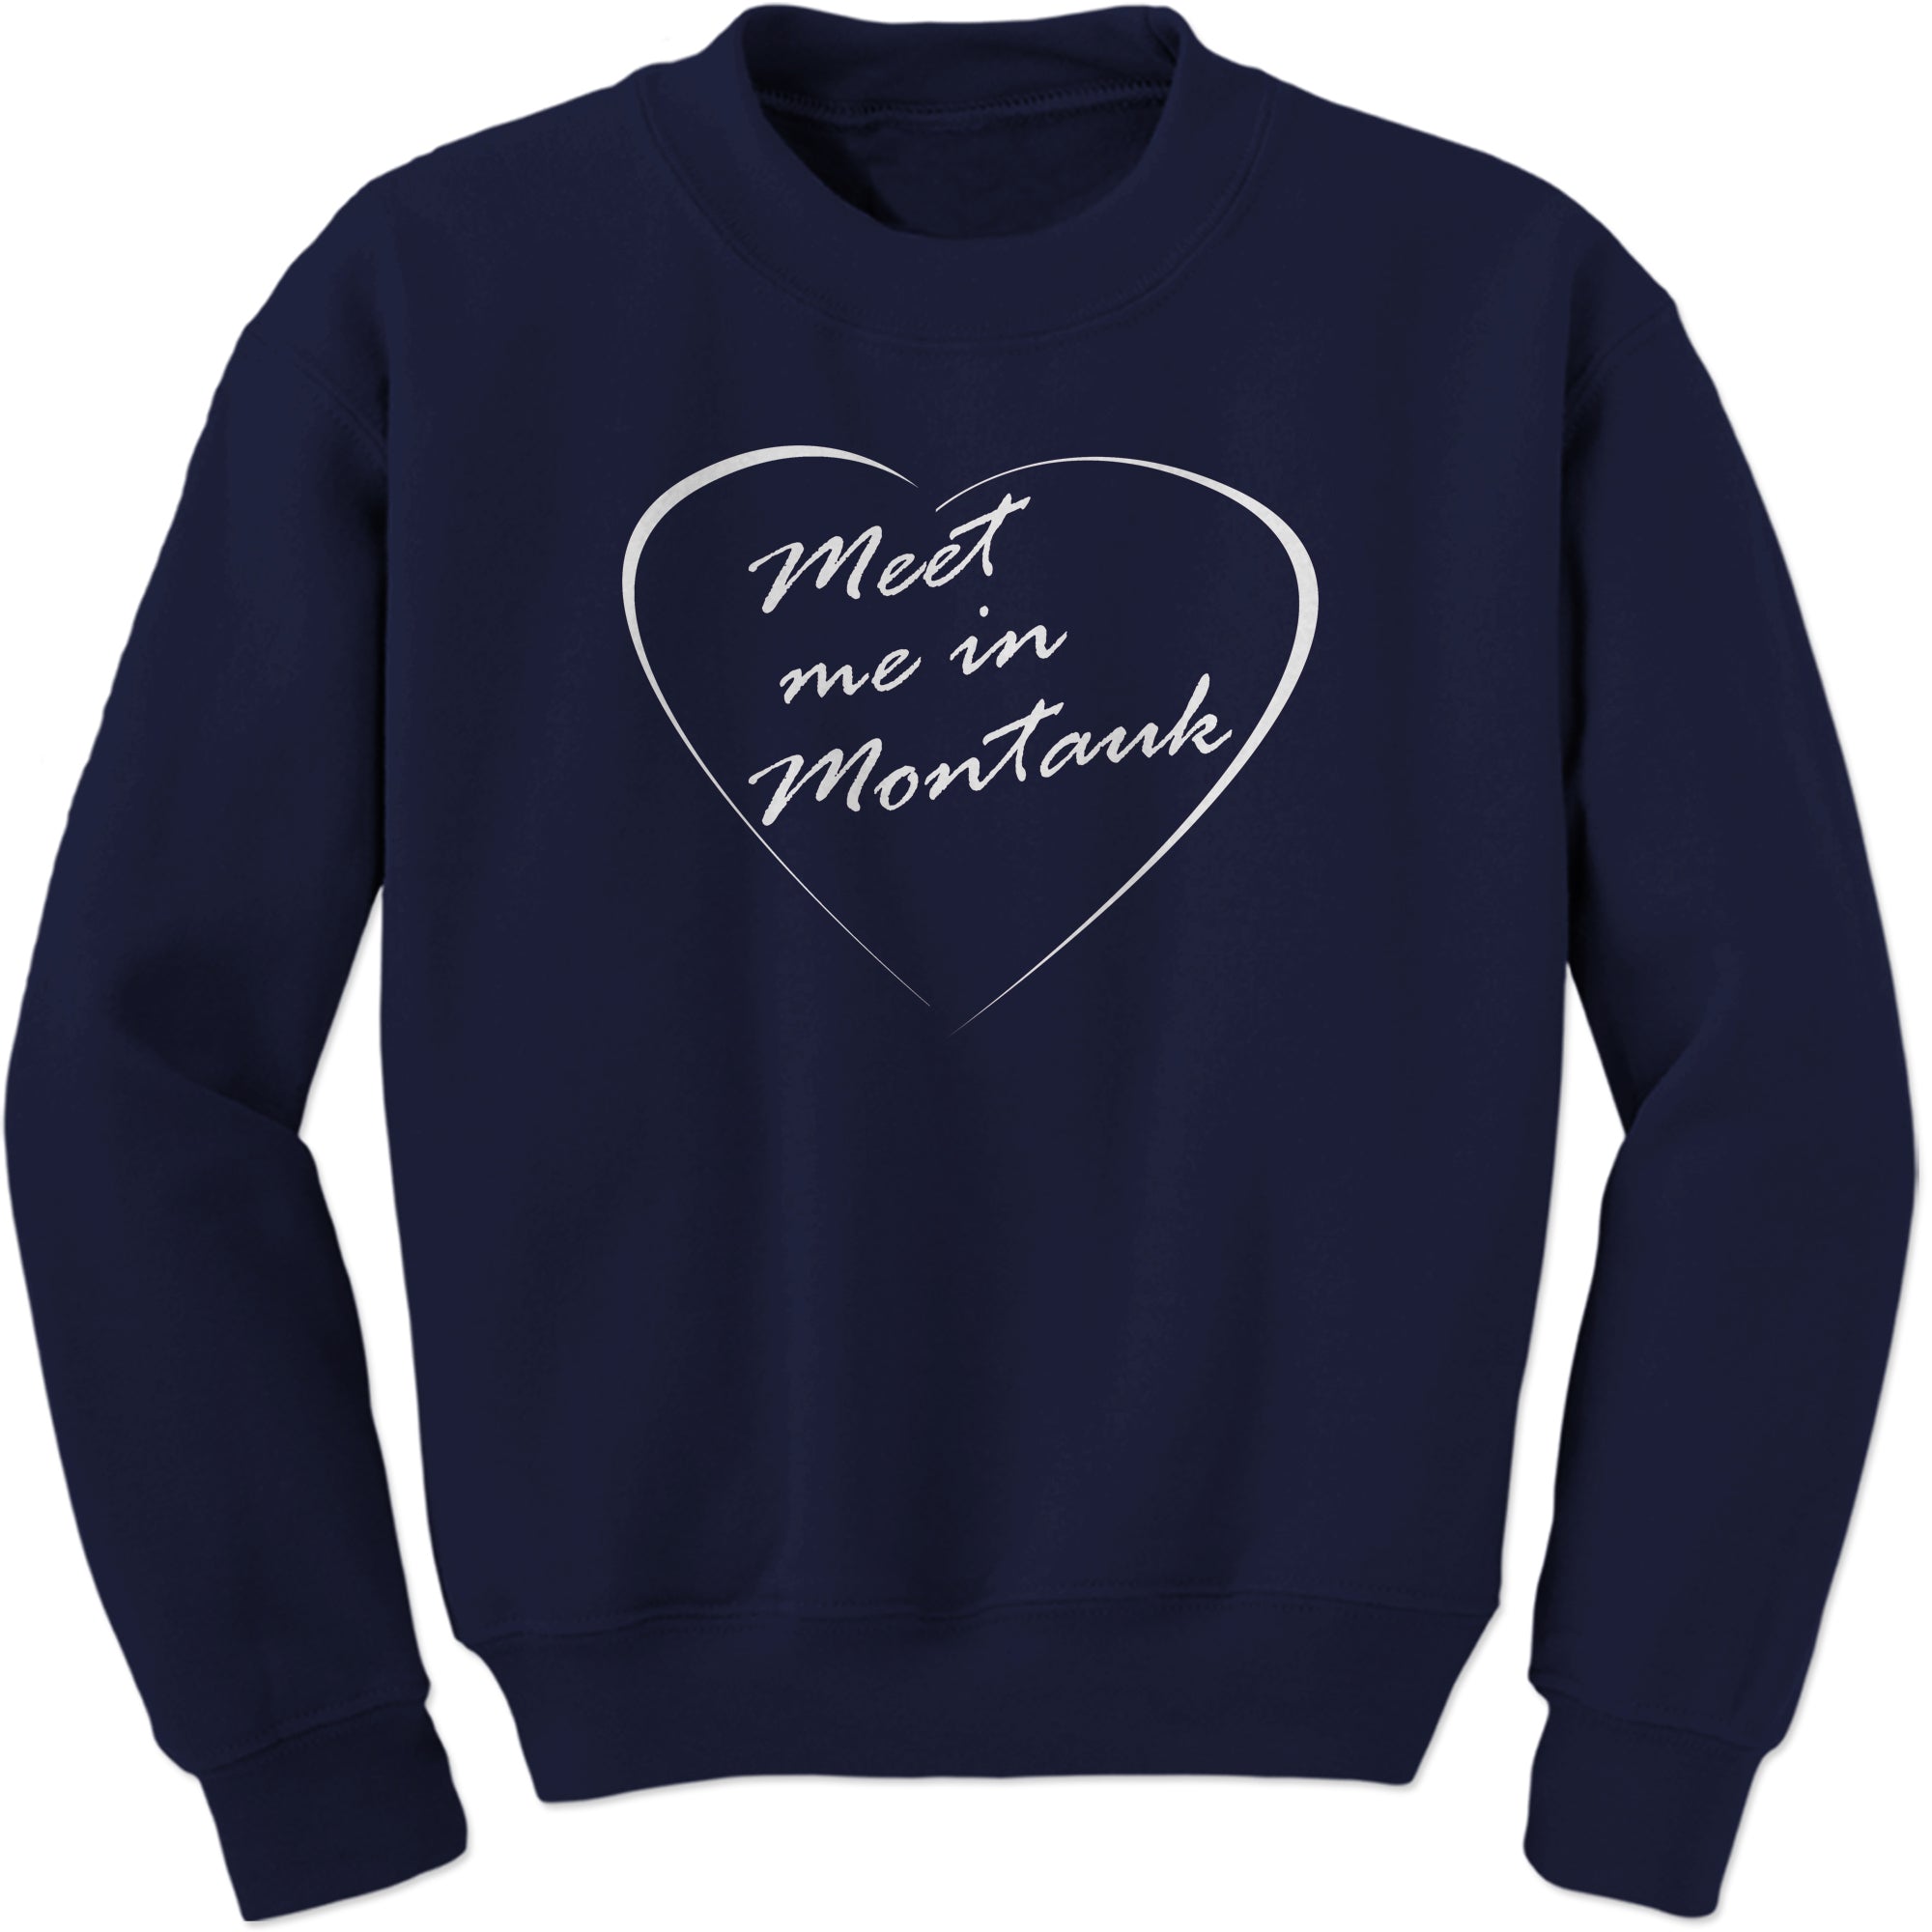 Meet Me in Montauk Eternal Sunshine Words of love Sweatshirt